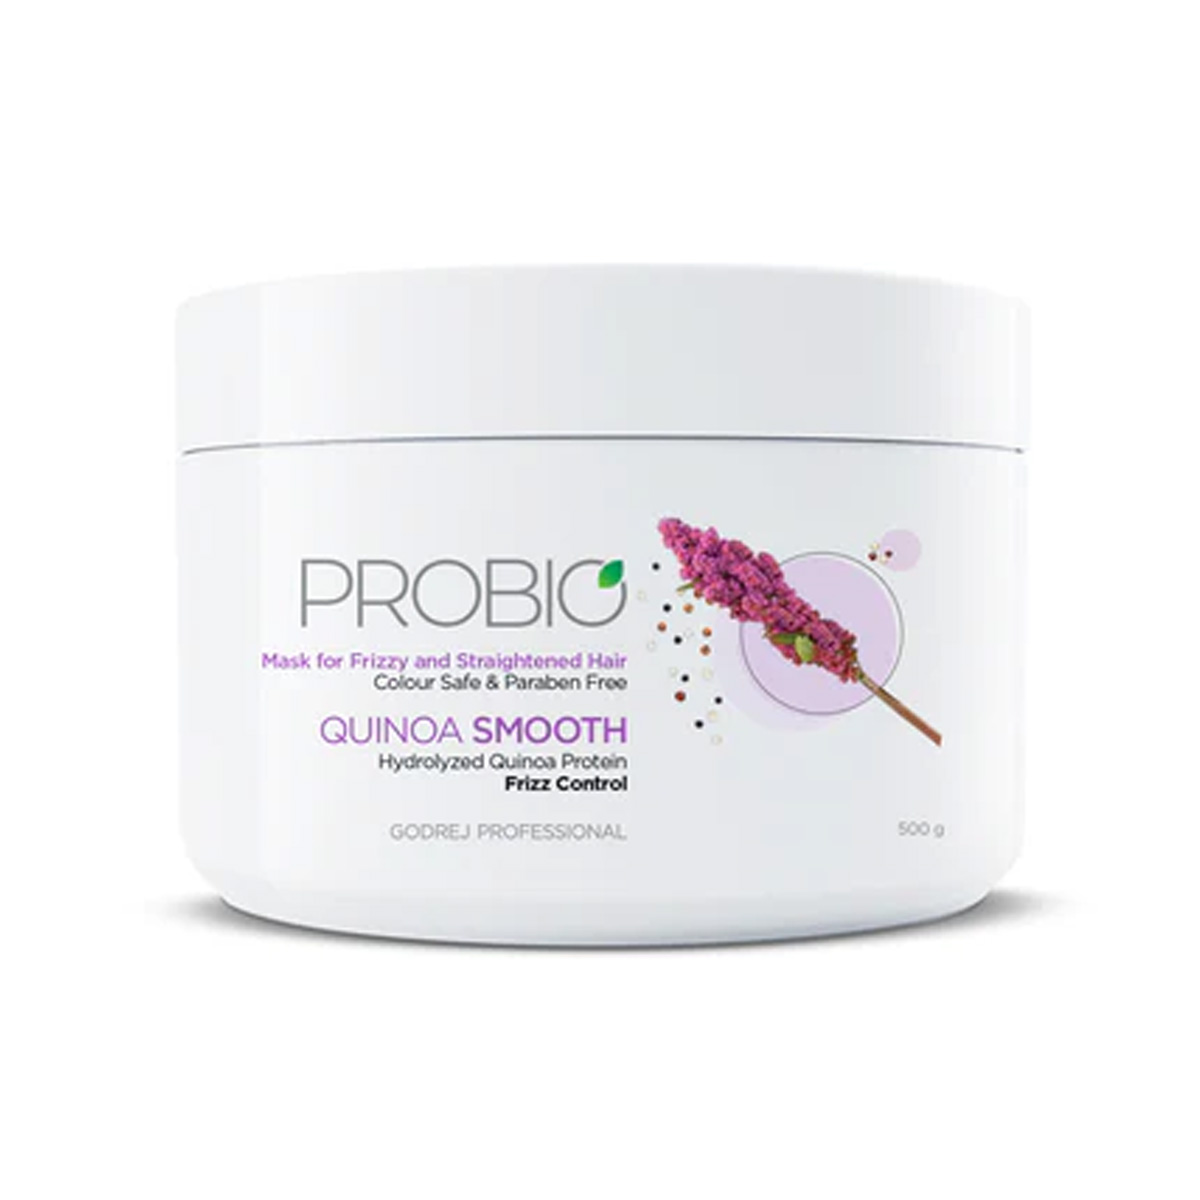 Godrej Professional Probio Quinoa Smooth Frizz Control Hair Mask, 500gm